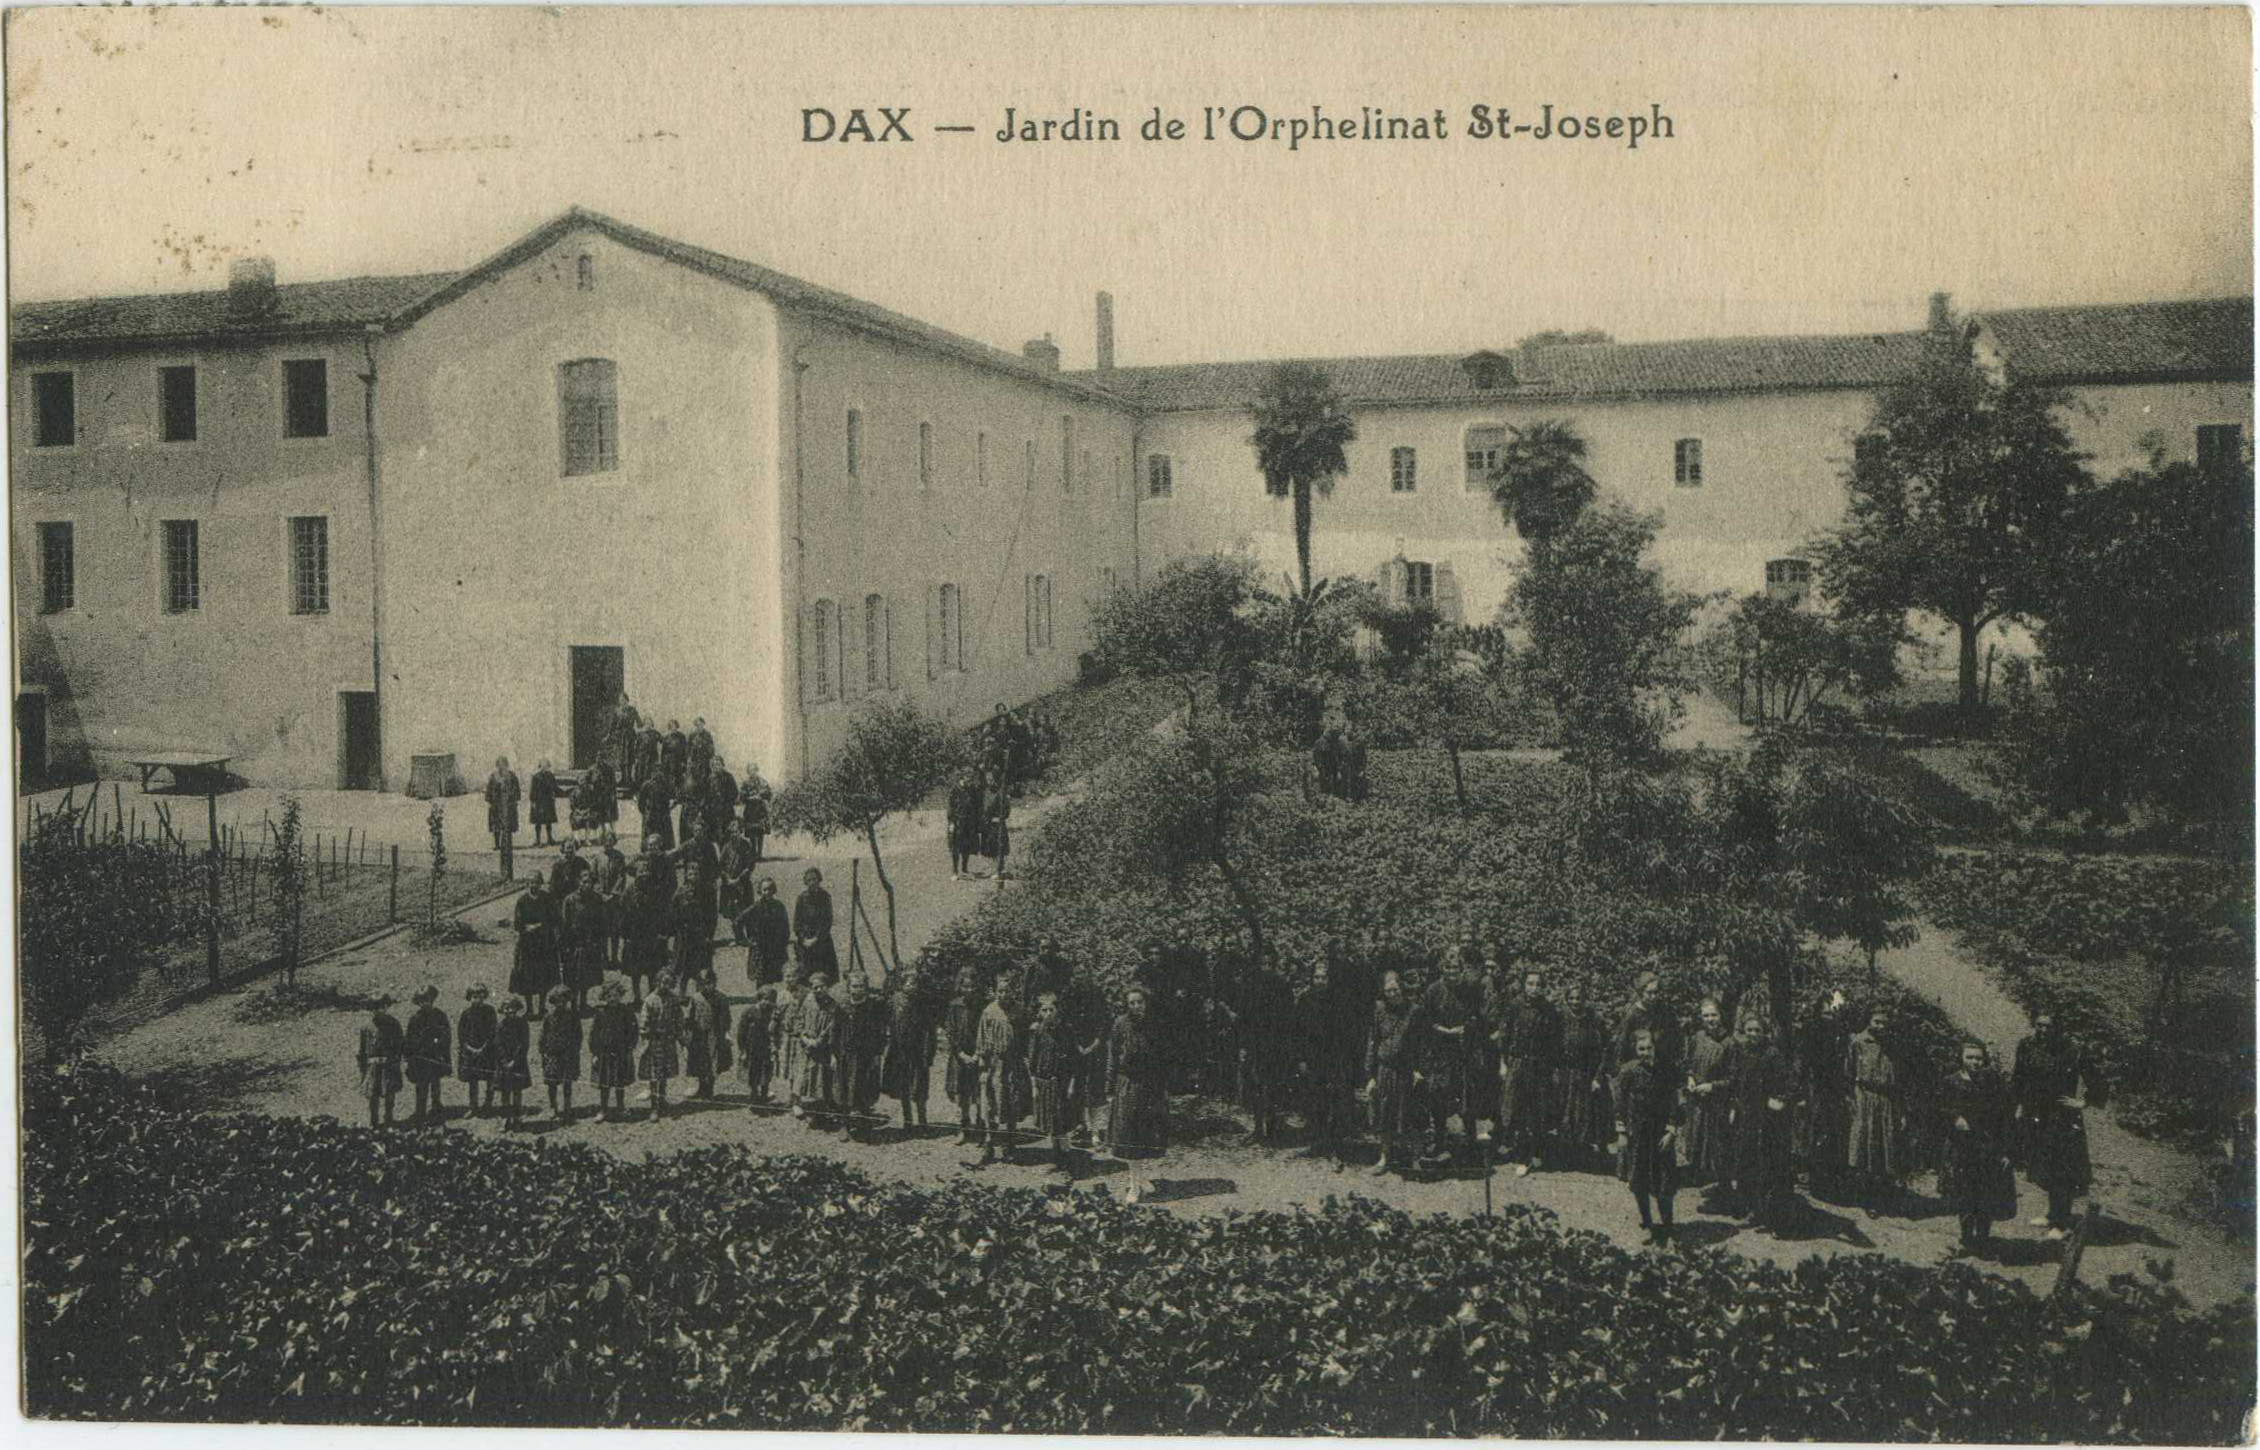 Dax - Jardin de l'Orphelinat St-Joseph